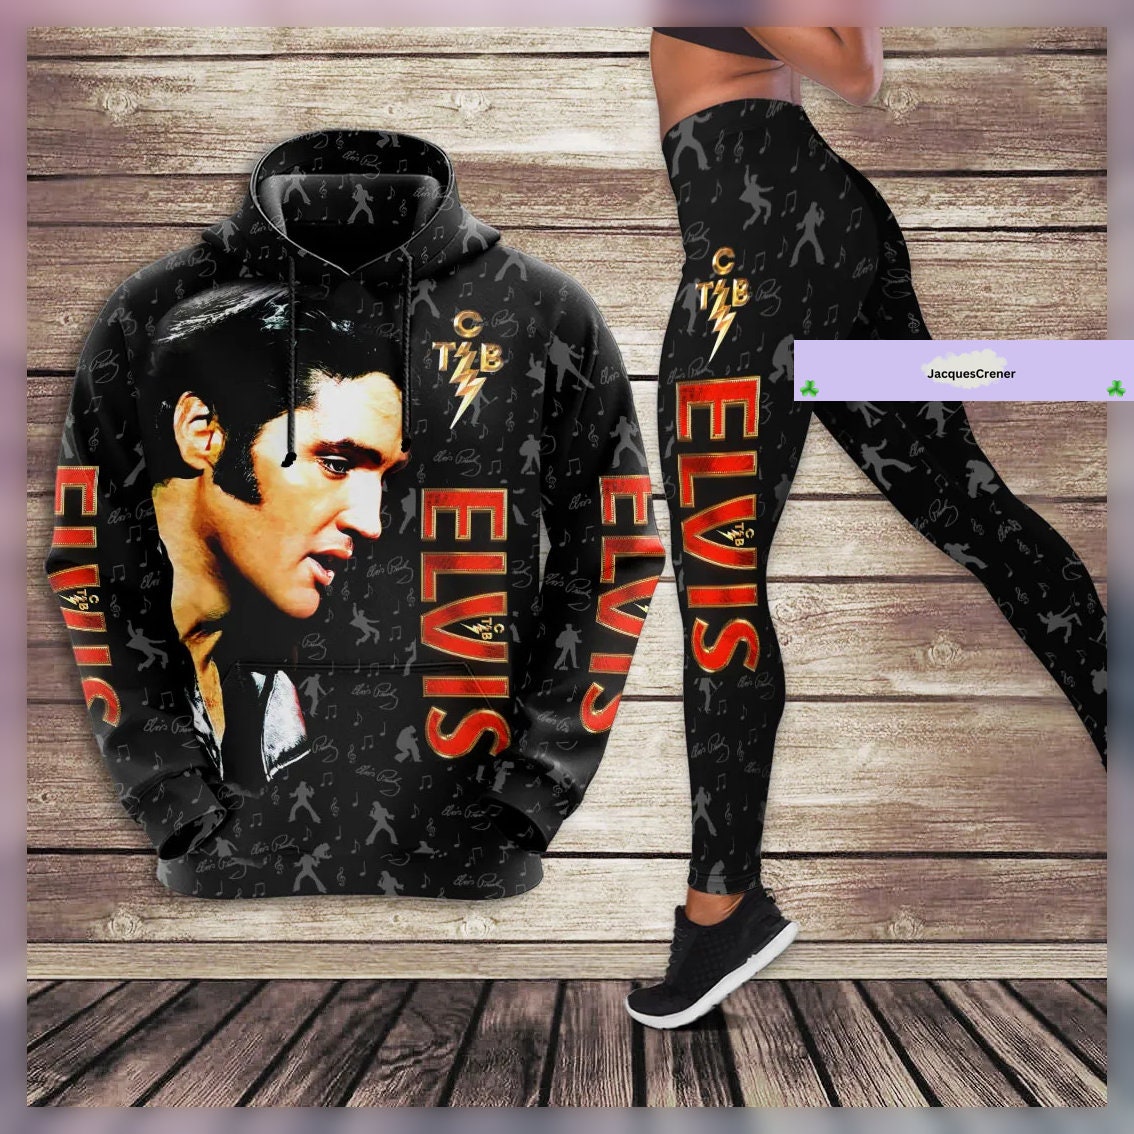 Elvis Presley TCB Faith Spirit Discipline Full-Zip Hoodie - BK - XXX-Large